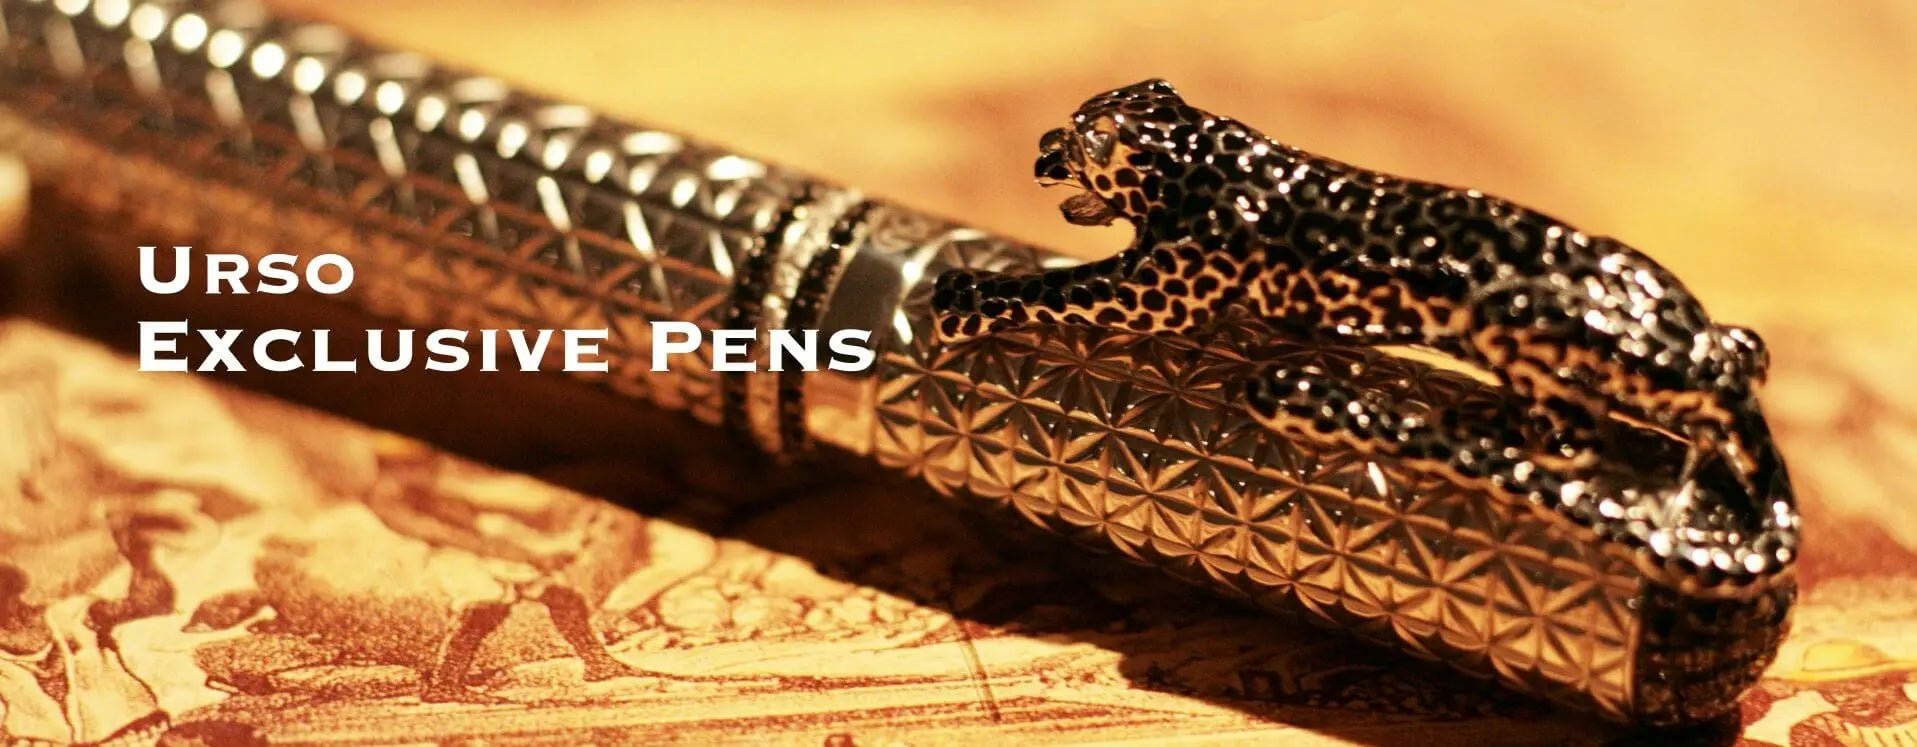 Urso Exclusive Pens